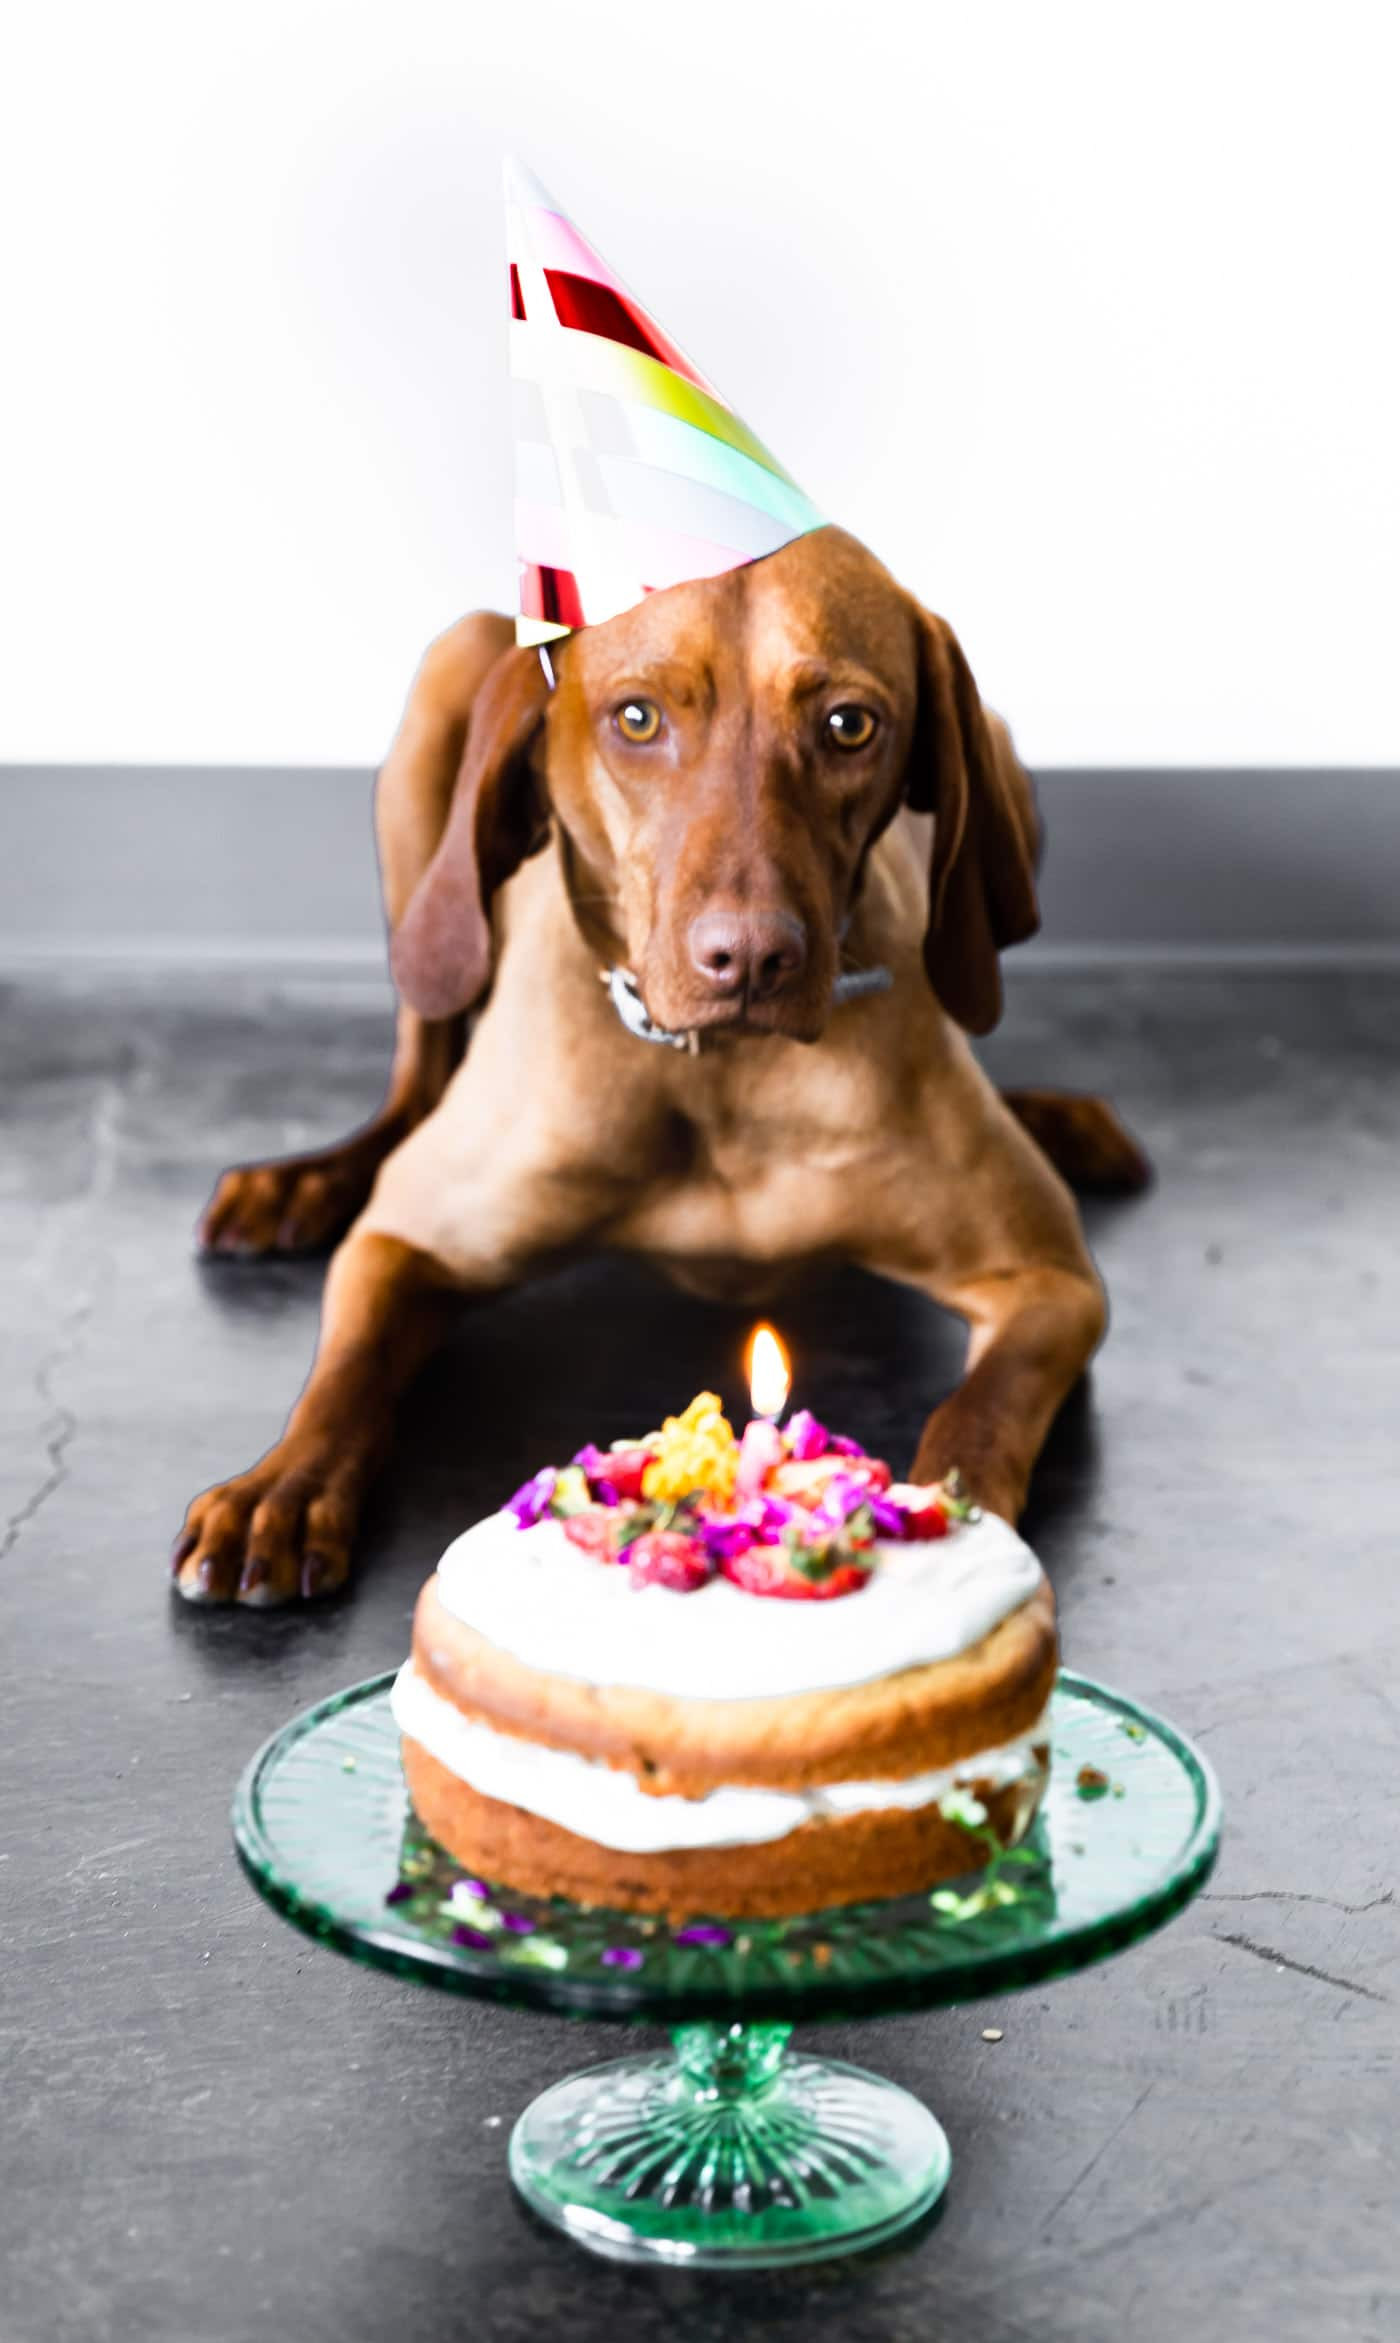 Doggie Birthday Cakes
 Birthday Cake for Dogs Grain Free Recipe